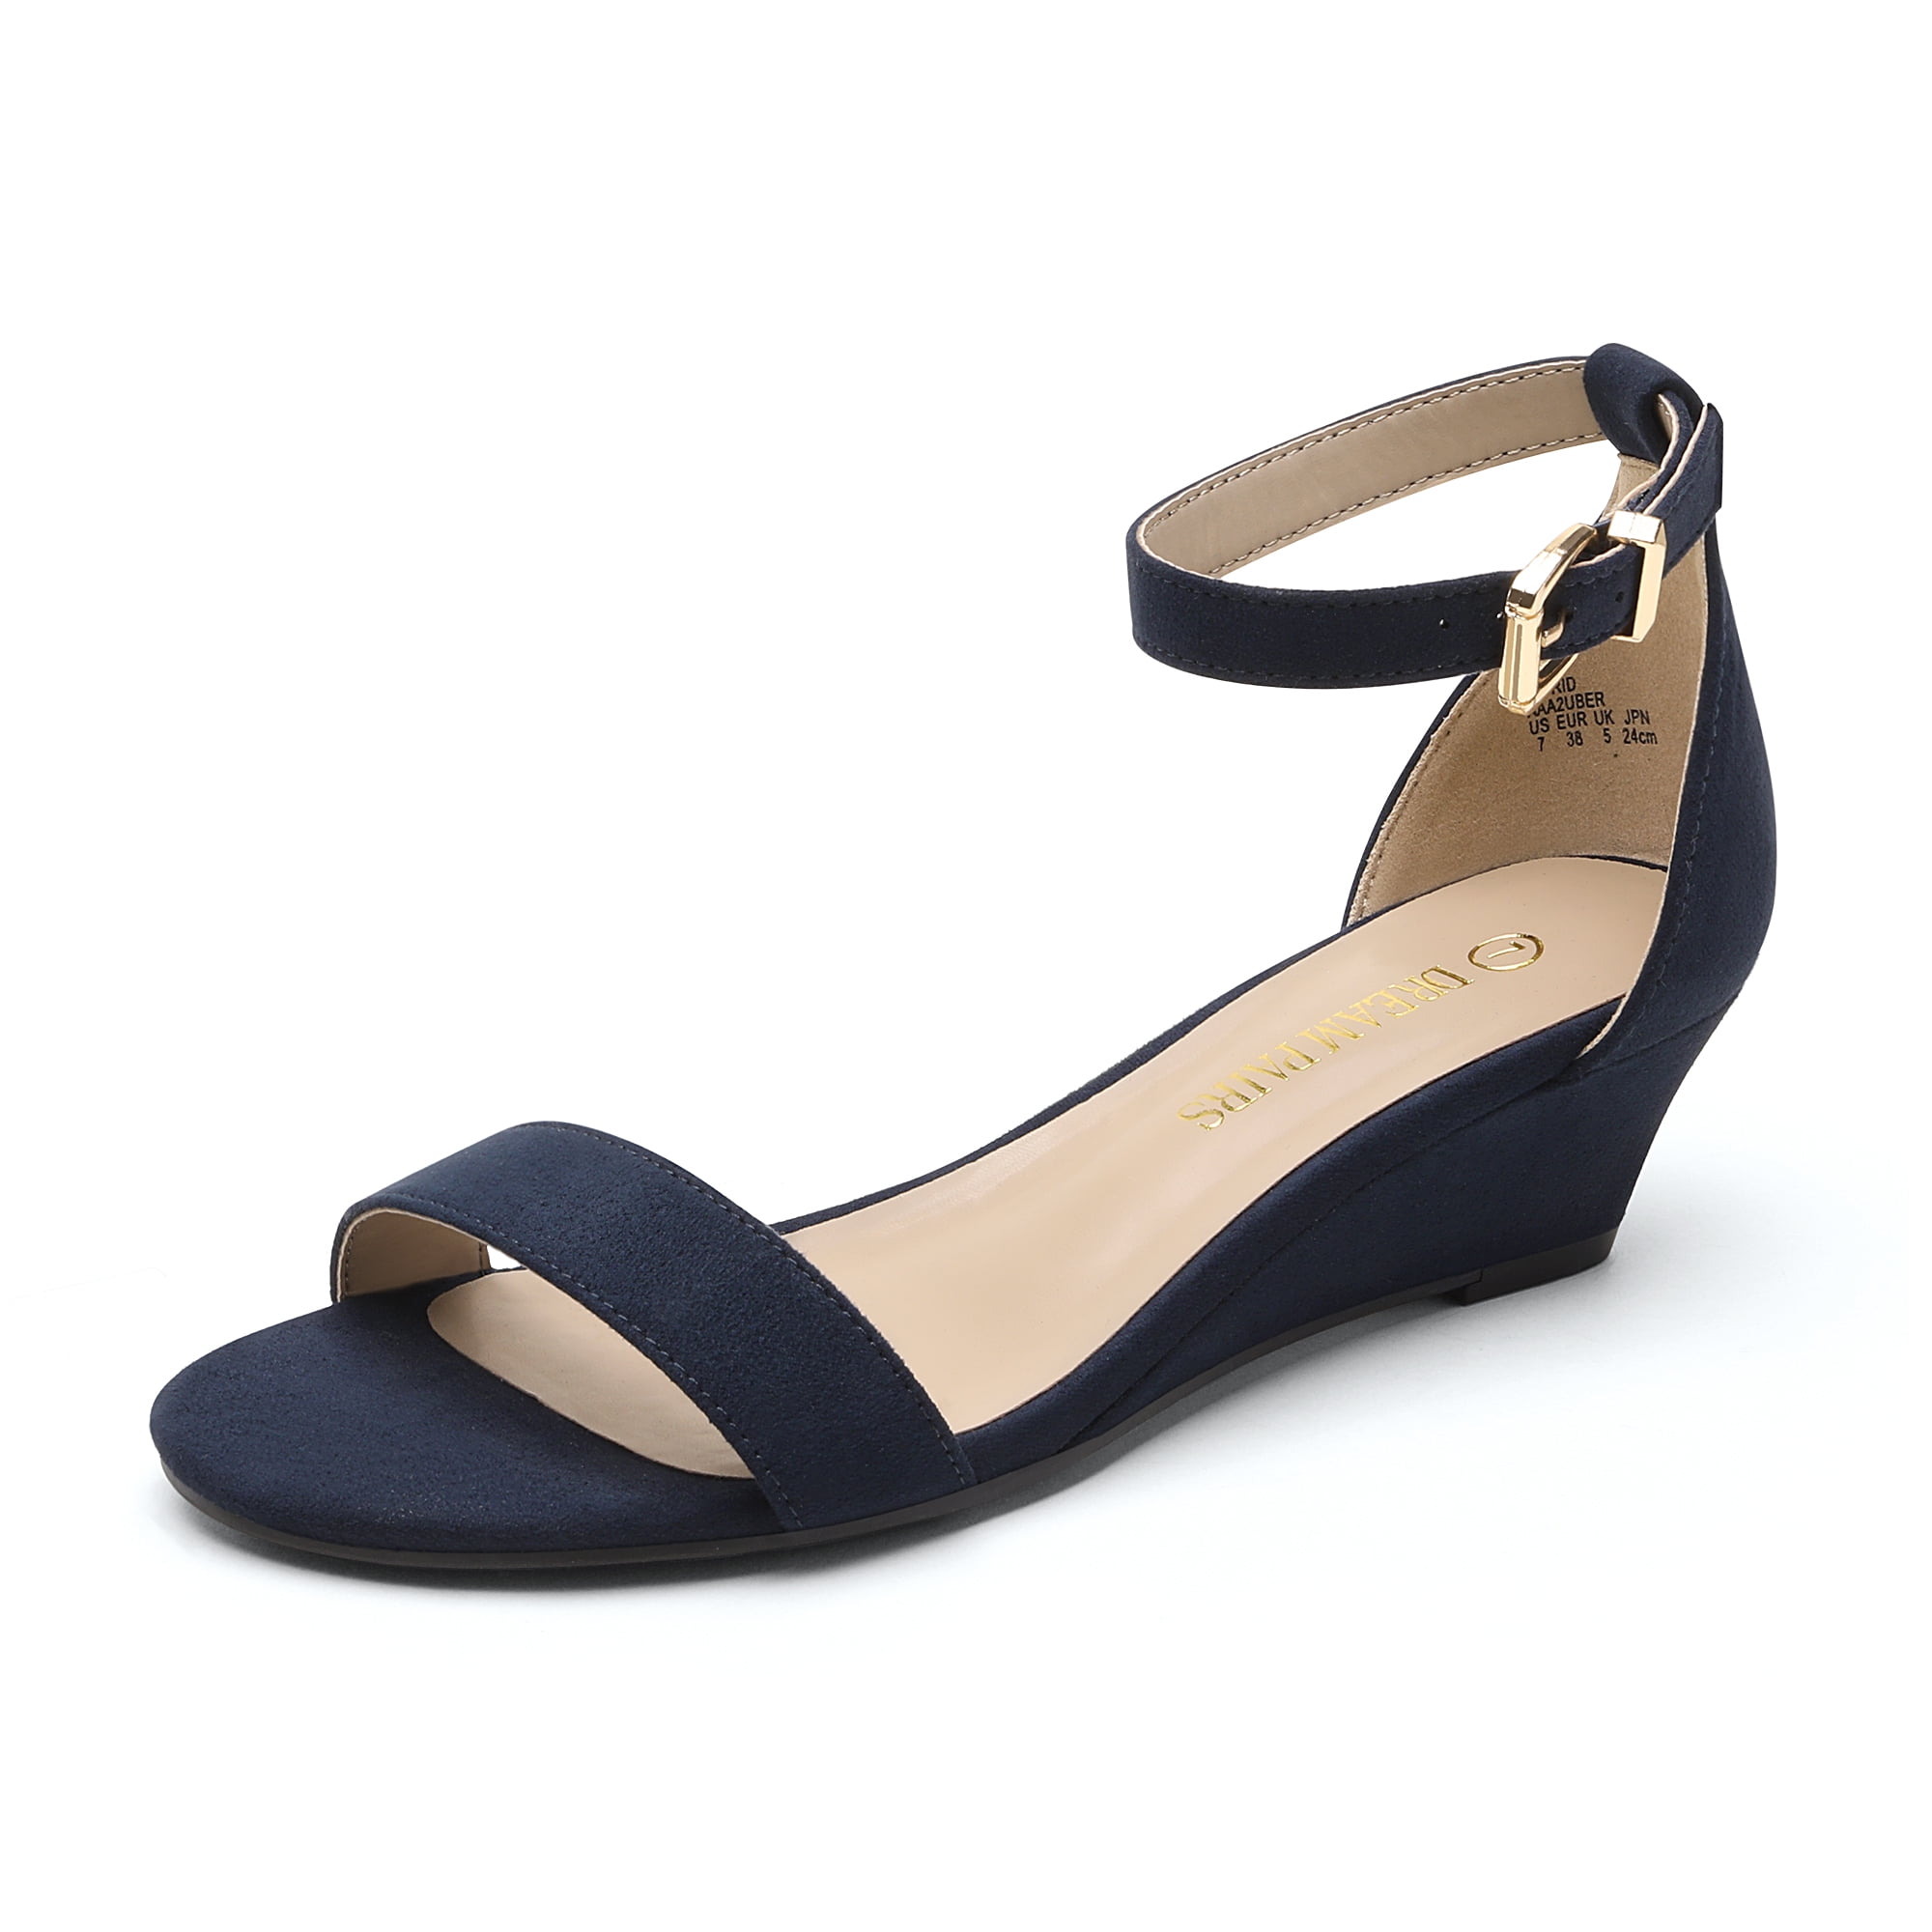 Women's Fashion Wedge High Heel Open Toe Buckle Sandal Shoes Size 5.5-11 